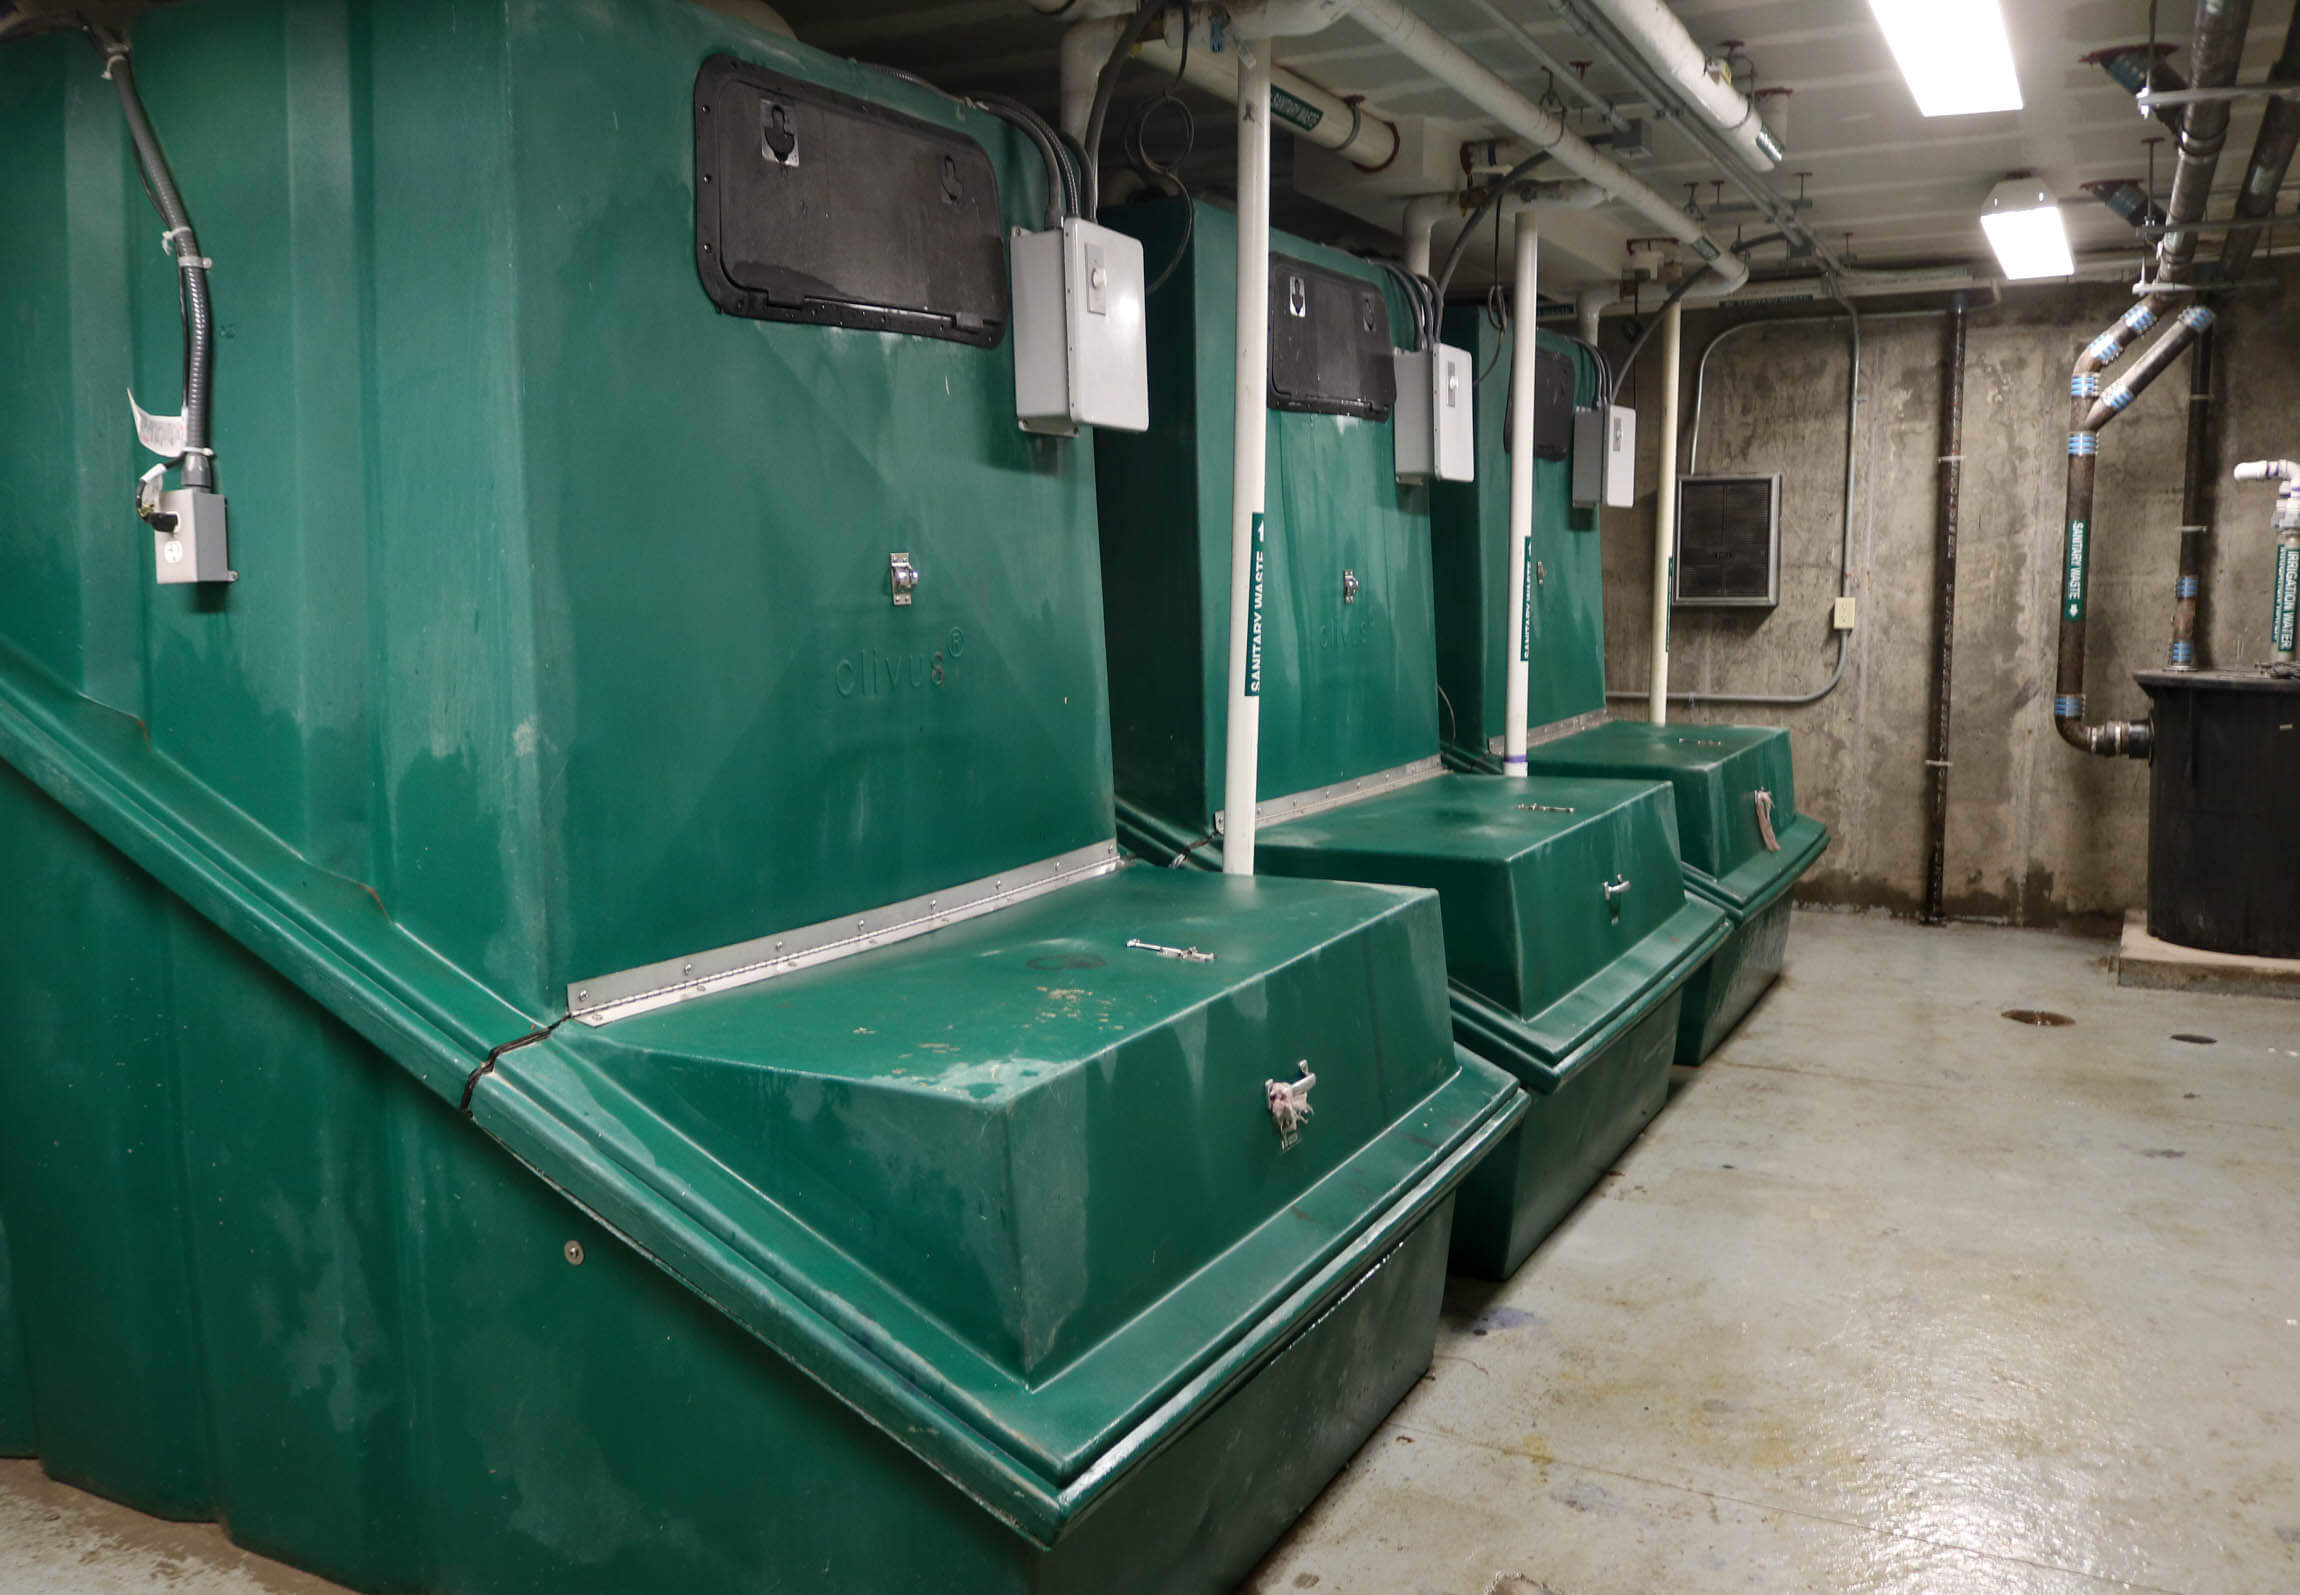 prospect park composting toilet wellhouse history bins